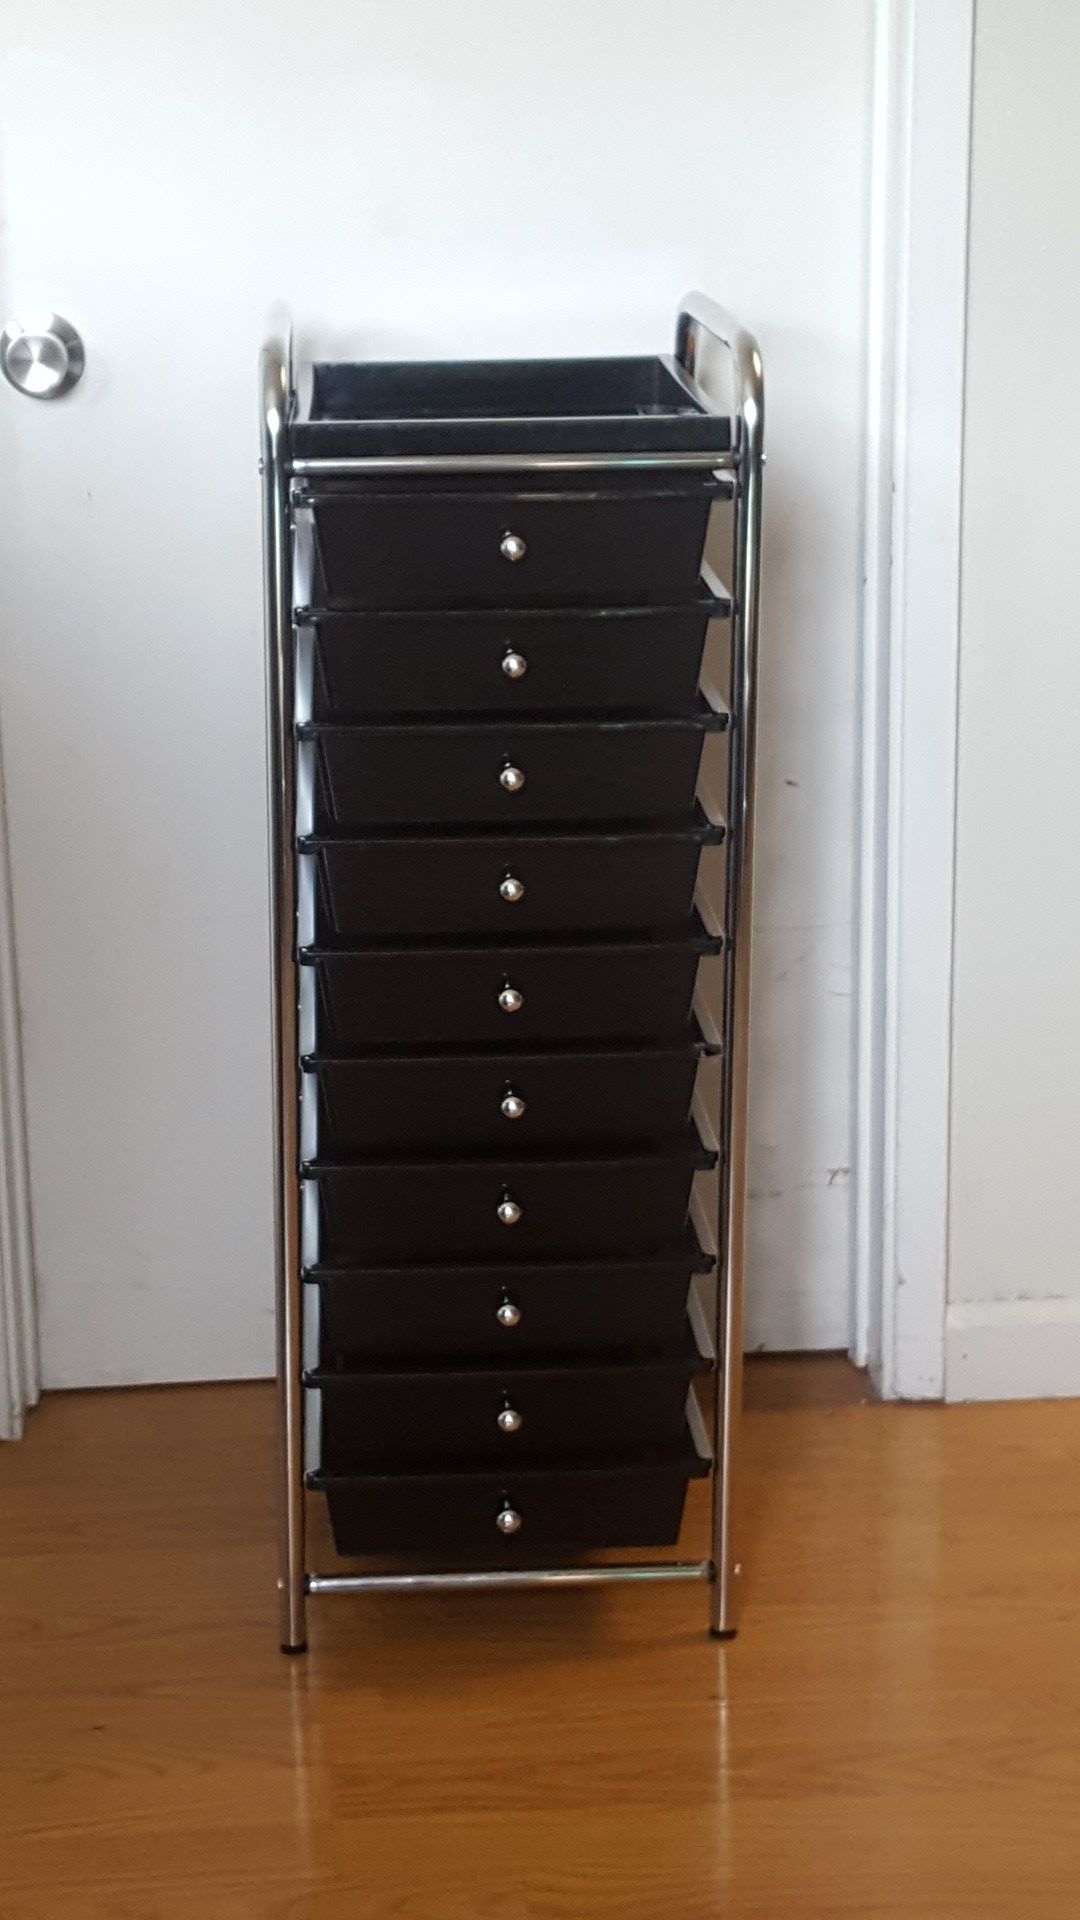 10 drawer plastic rolling storage organizer with wheels